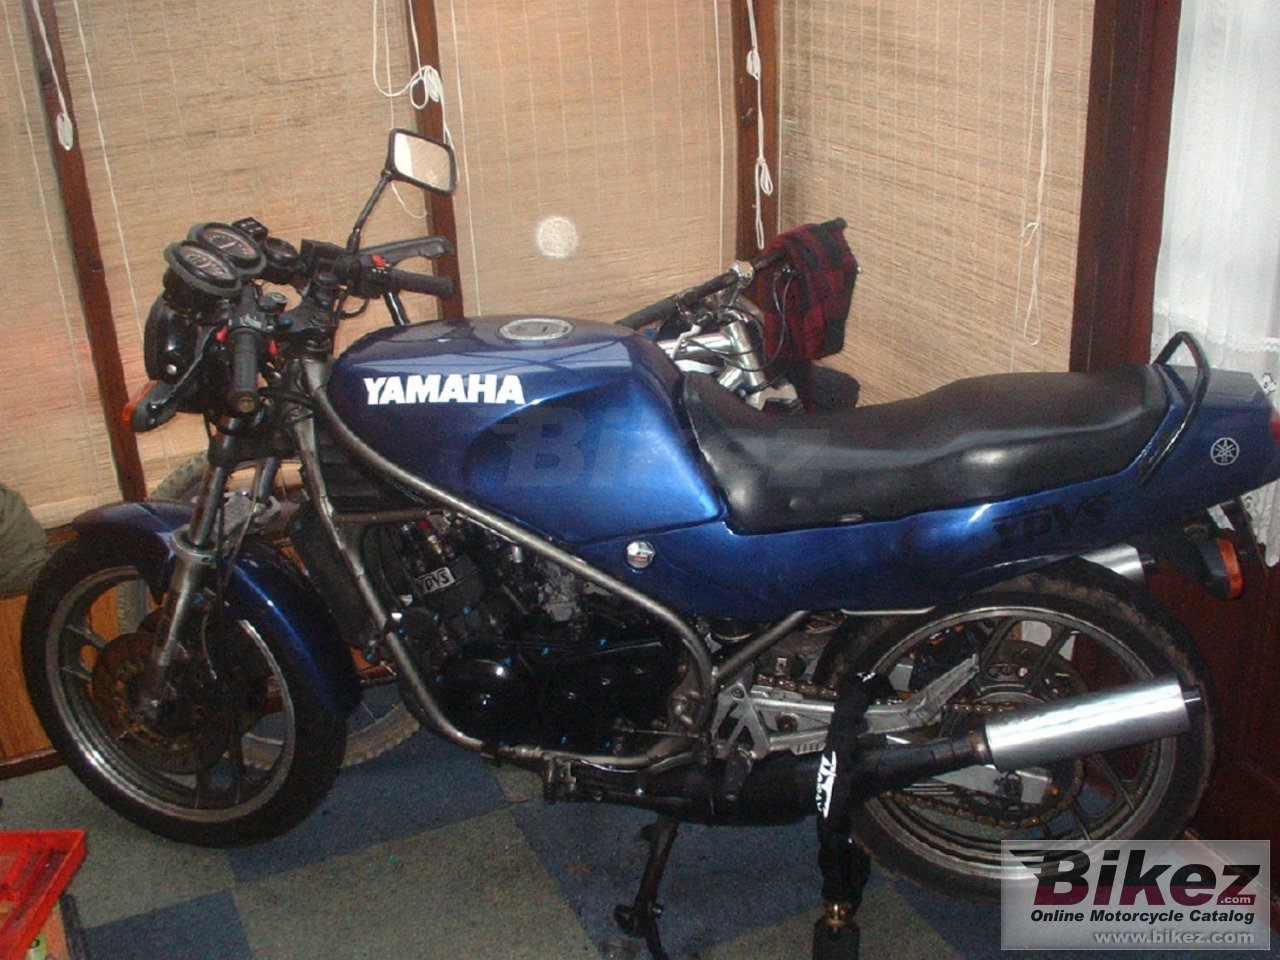 Yamaha RD 350 F